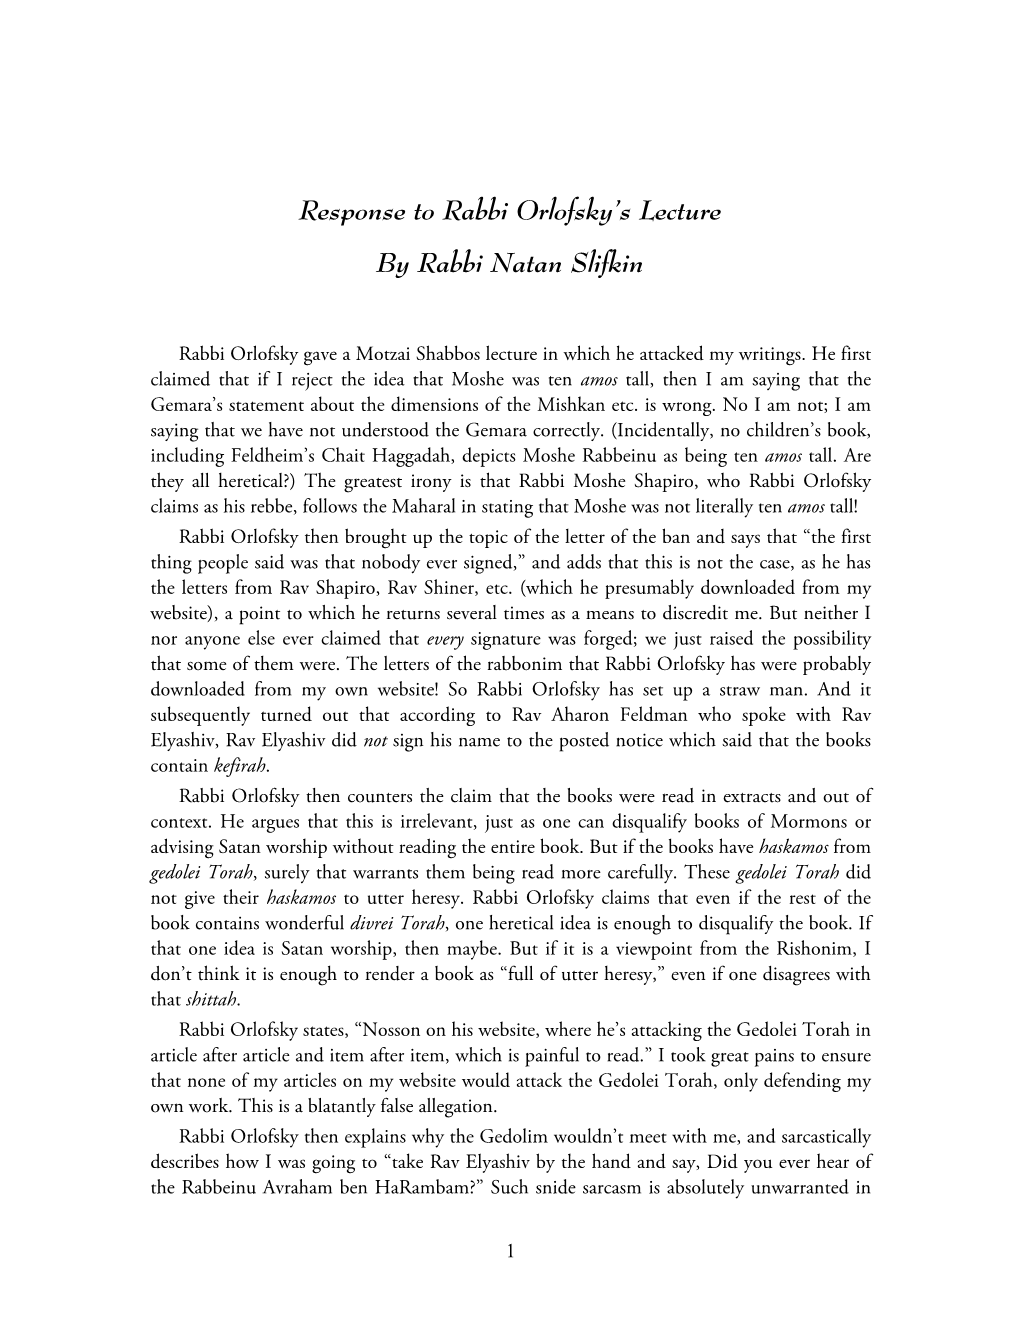 Response to Rabbi Orlofsky's Lecture by Rabbi Natan Slifkin